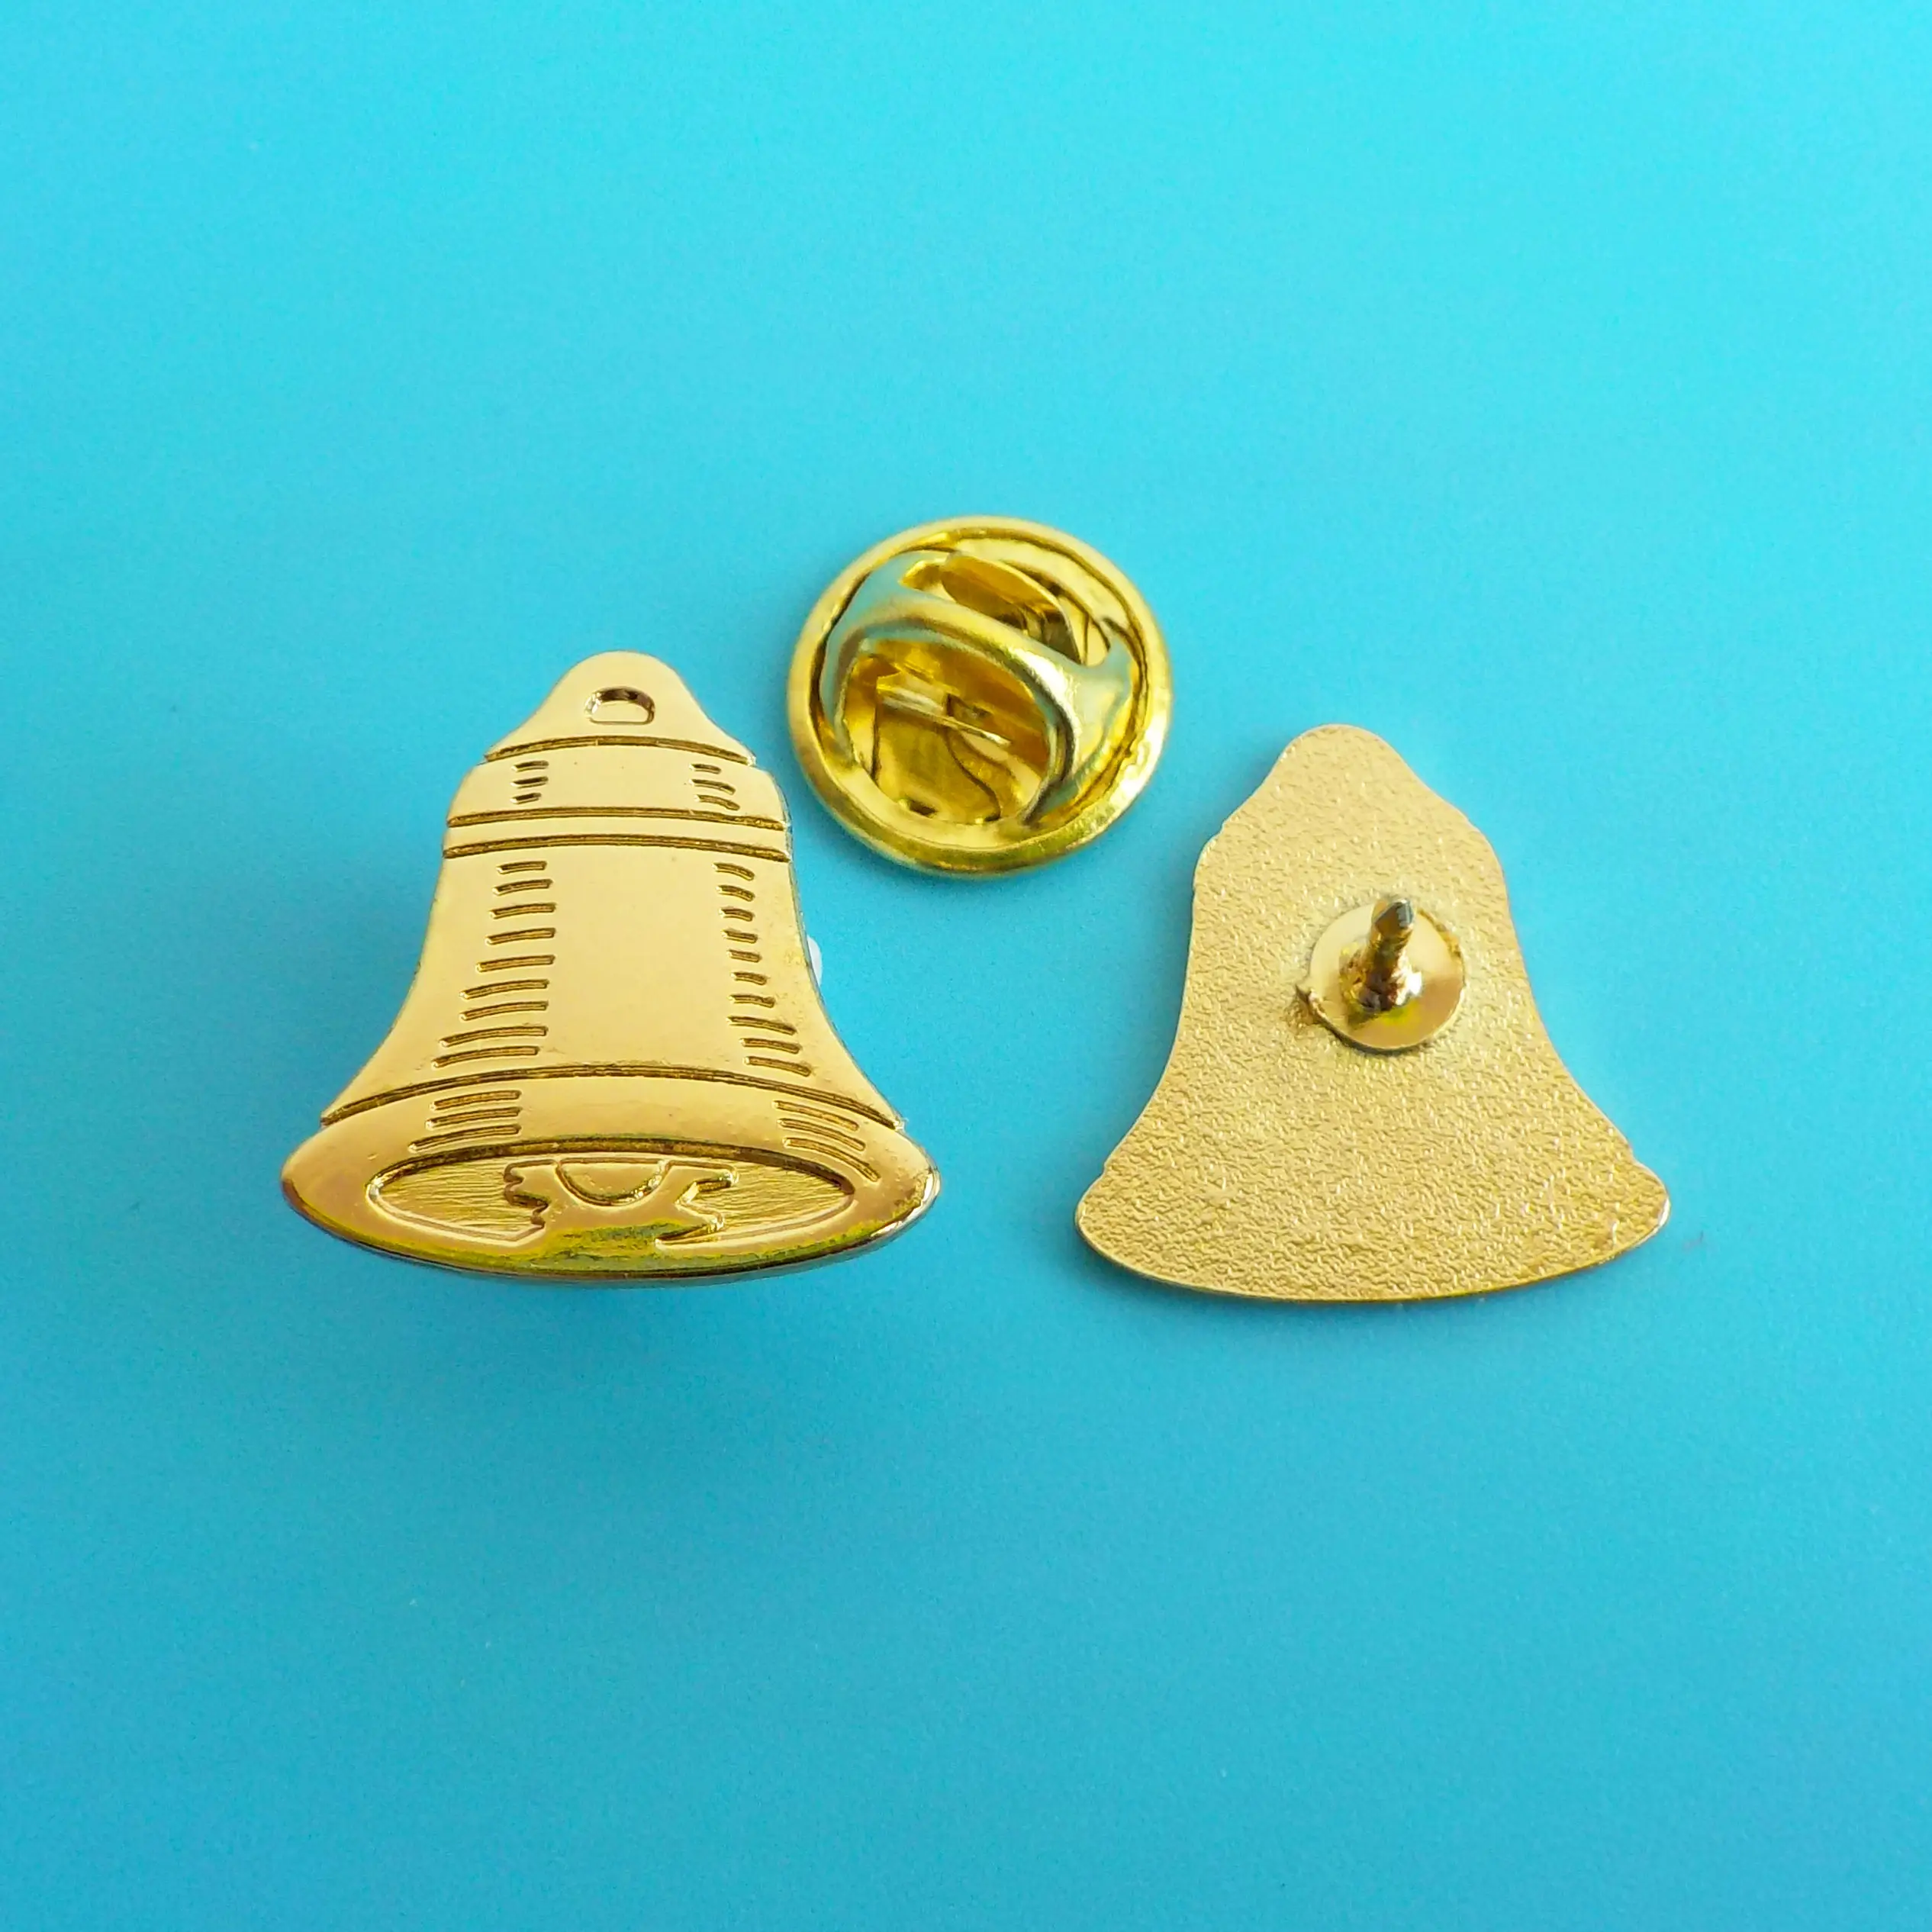 Golden Jingle Bell design metal lapel pin for Christmas